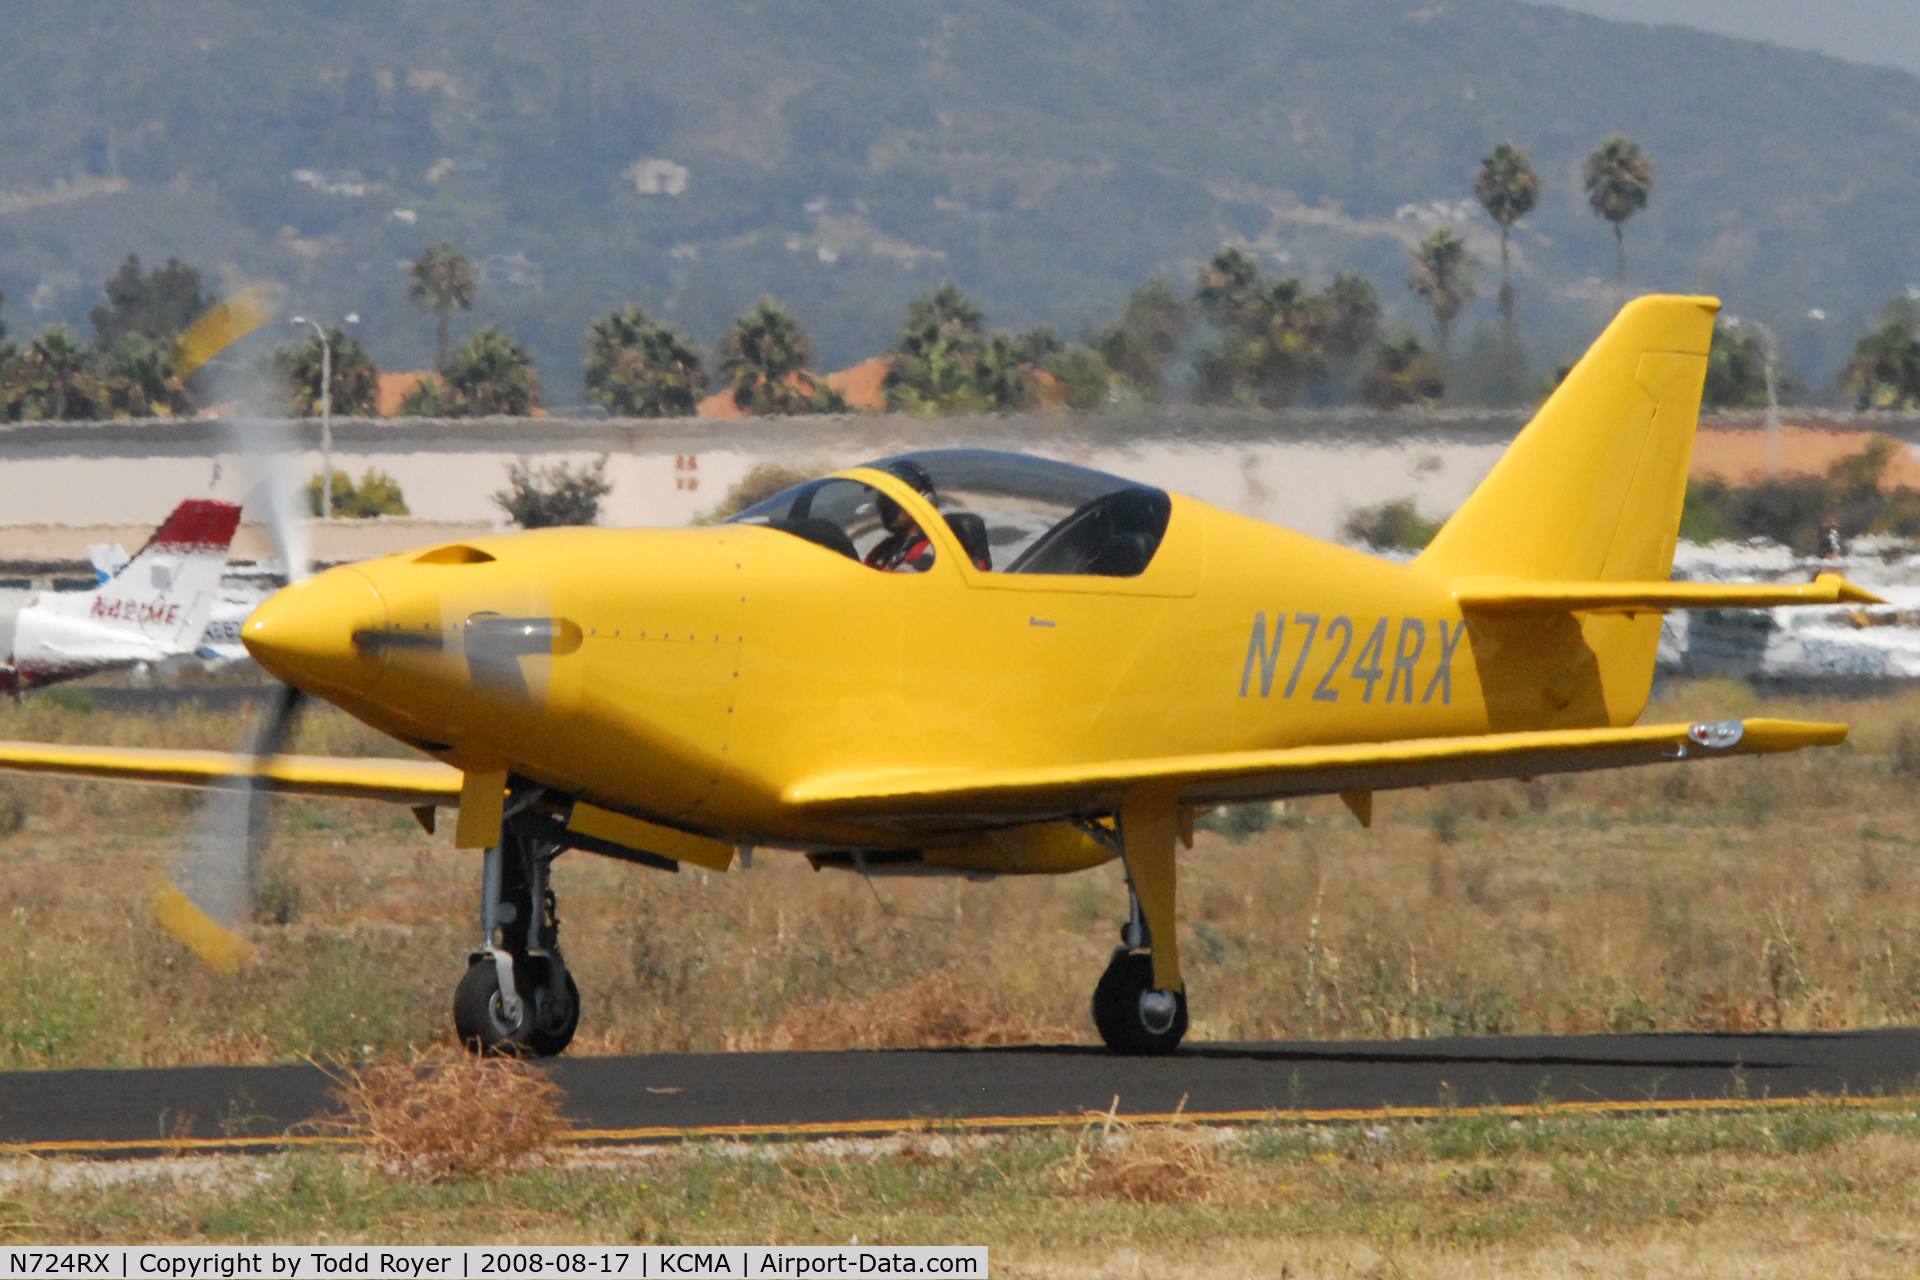 N724RX, 2006 Legend Aircraft Legend C/N 001, Camarillo Airshow 2008